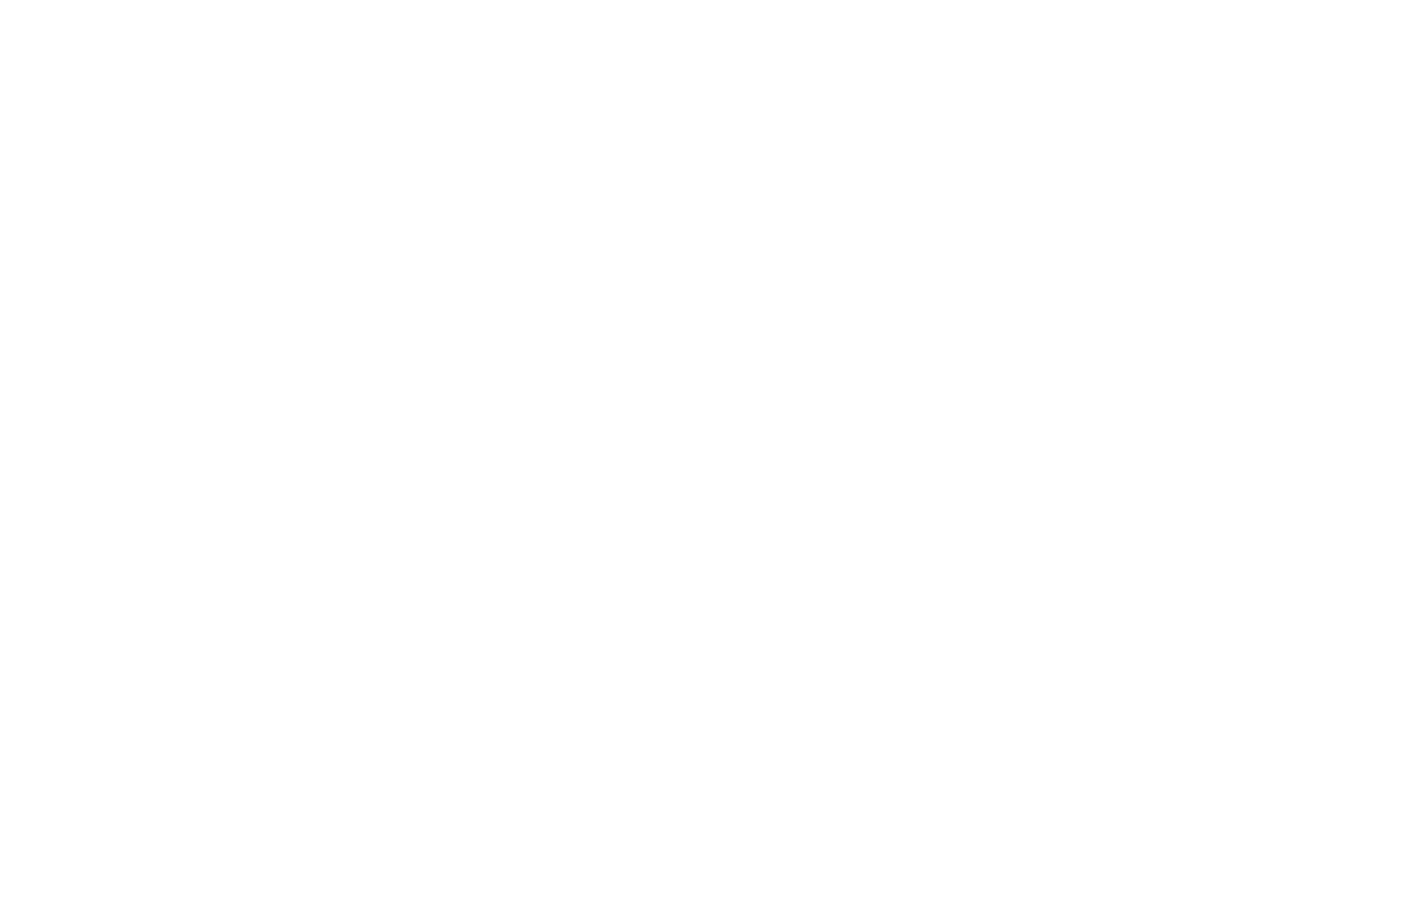 Ludia logo